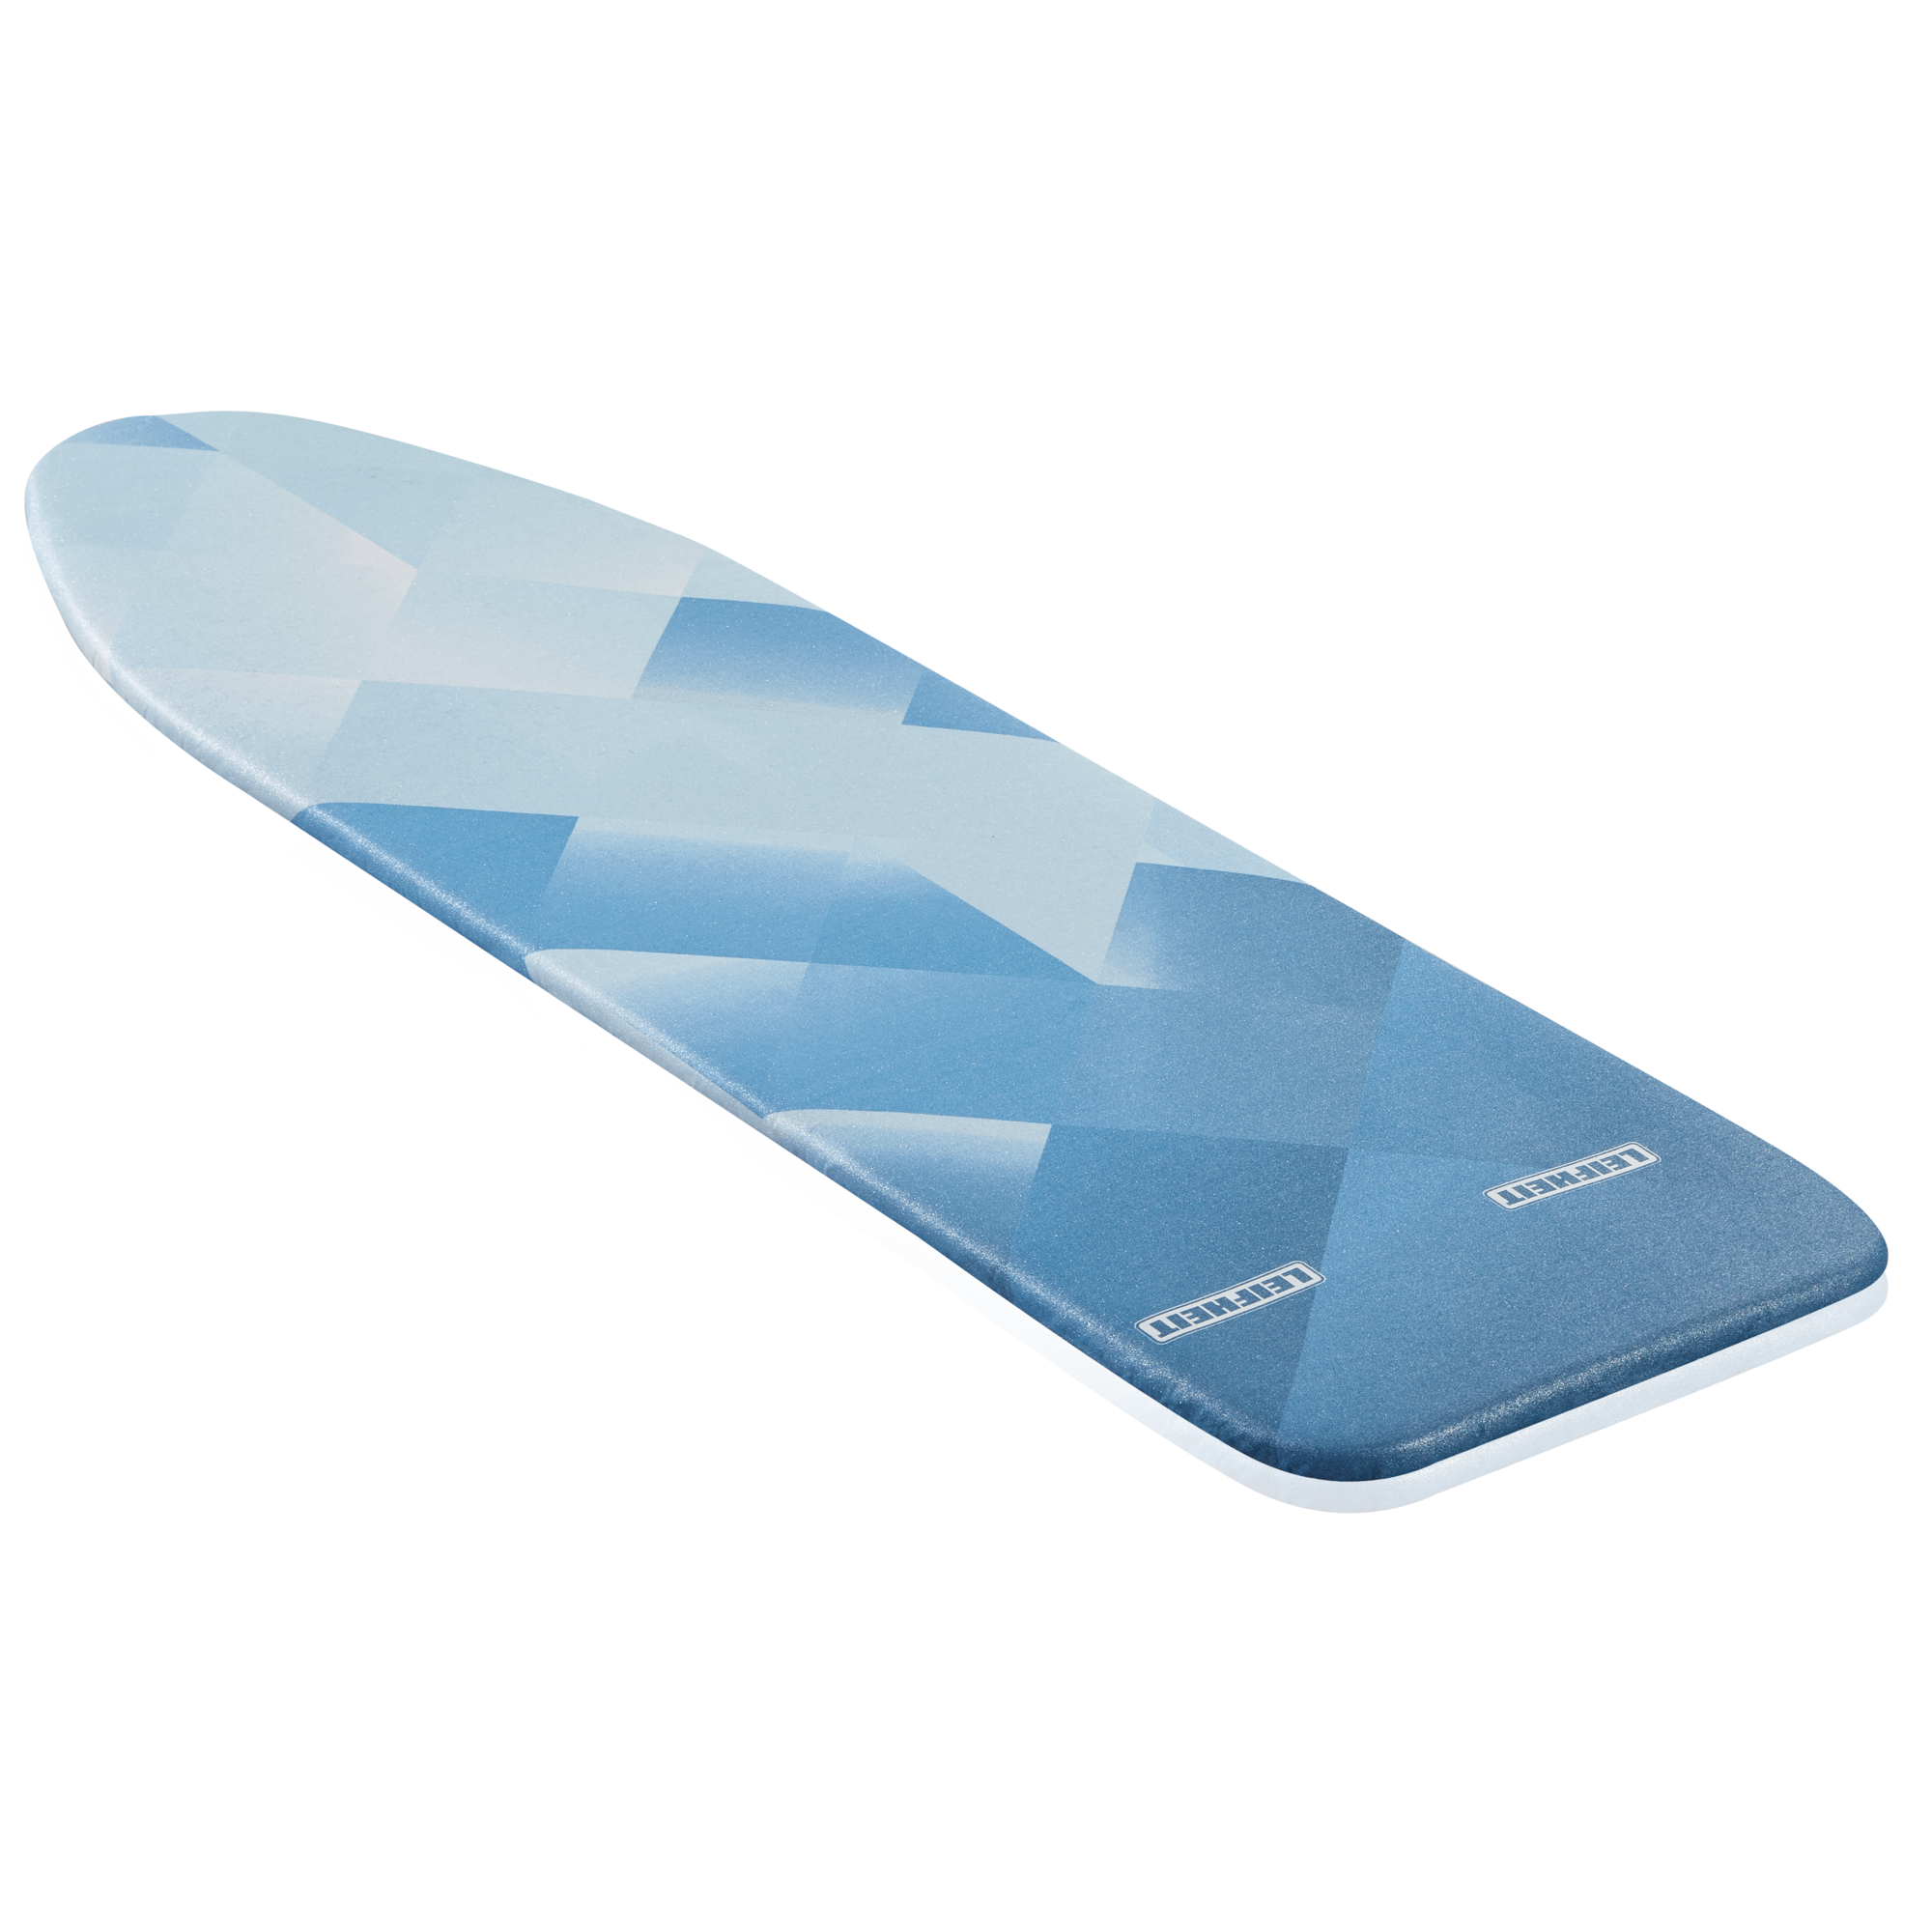 Bügeltischbezug 'Heat Reflect Universal' 140 x 45 cm blau + product picture